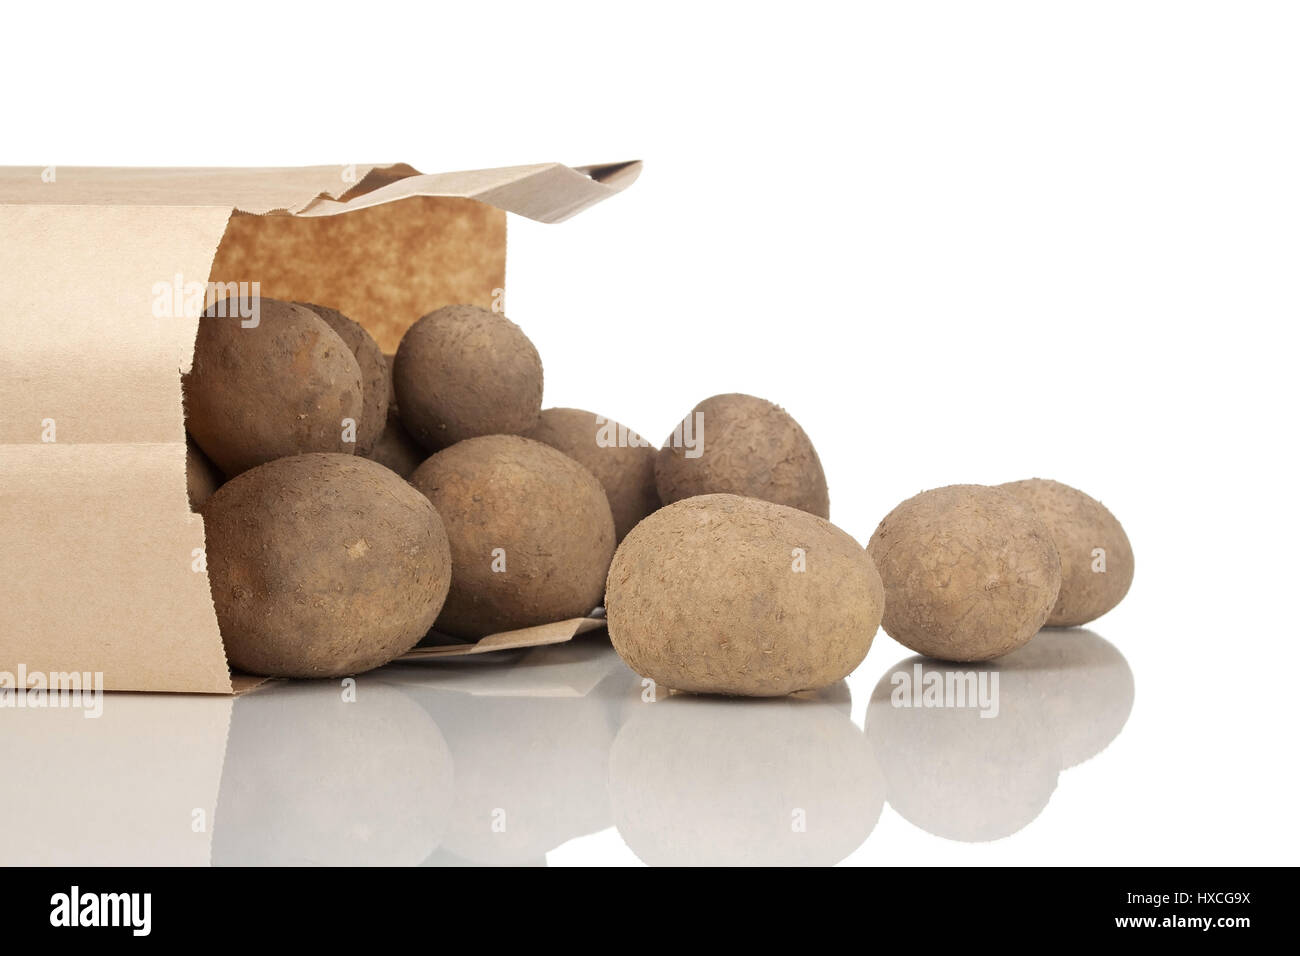 Potatoes in a paper bag, Potatoes in a paper bag |, Kartoffeln in einer Papiertuete |Potatoes in a paper bag| Stock Photo